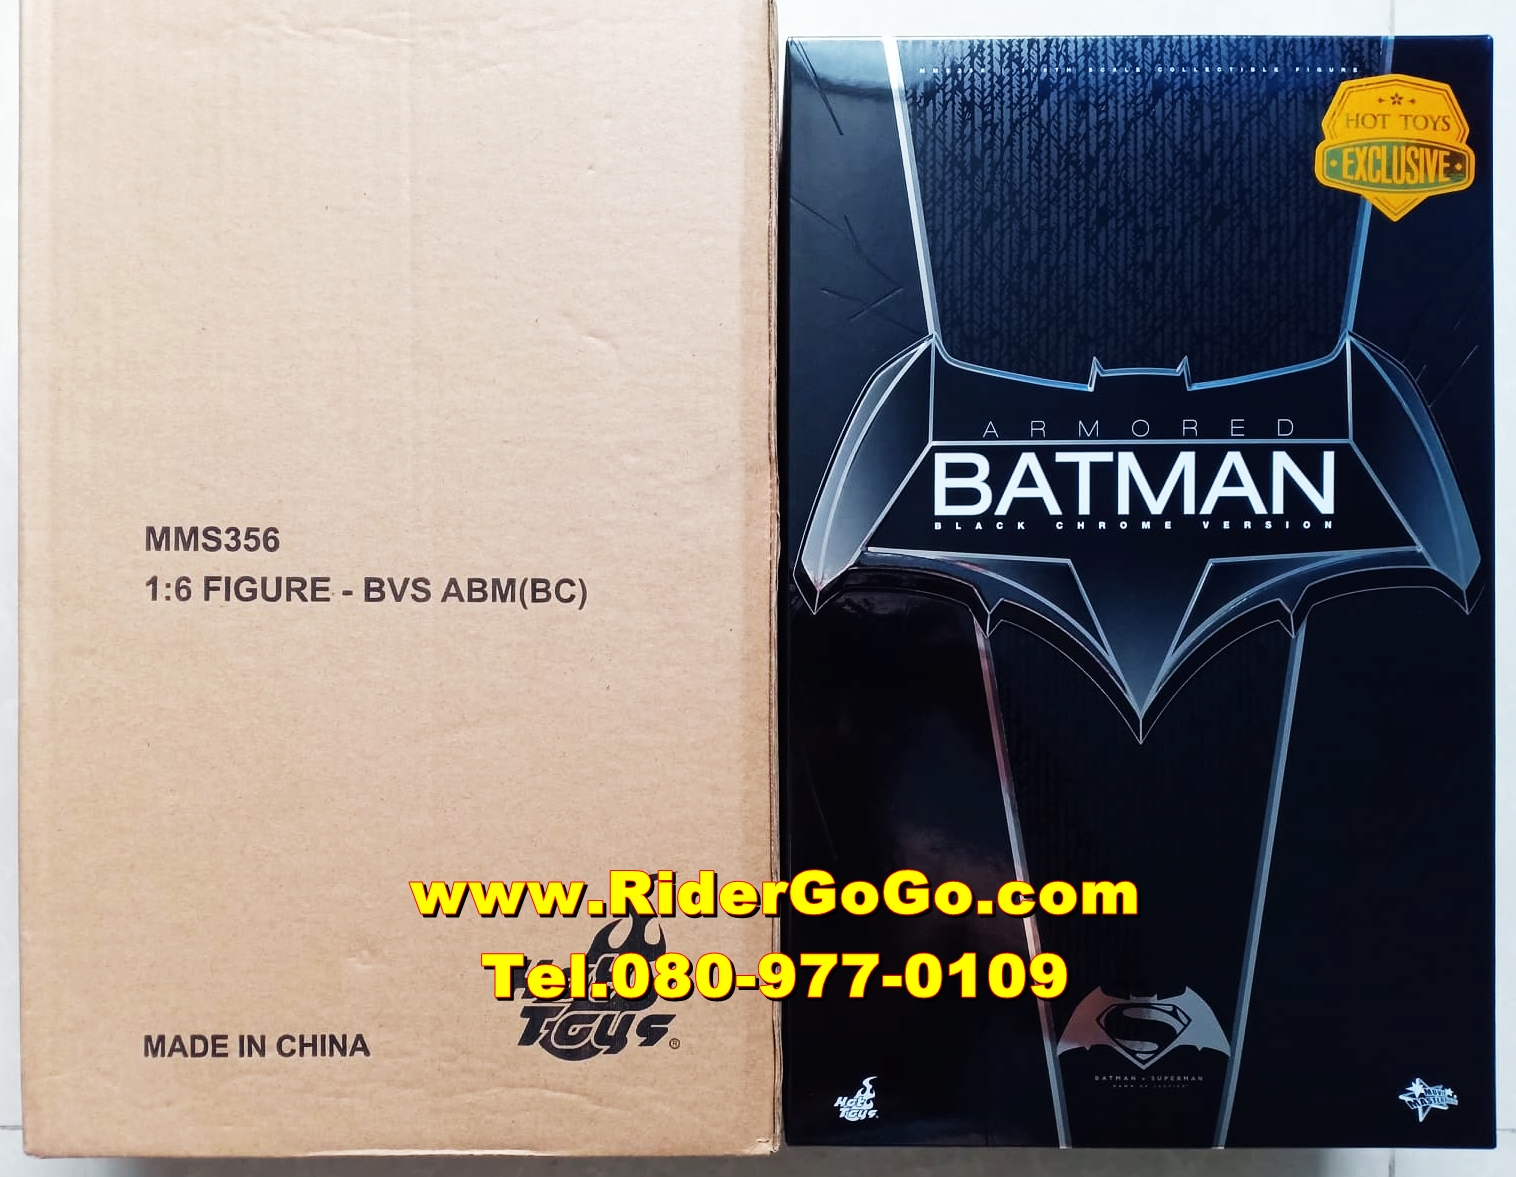 HOT TOYS BATMAN VS SUPERMAN ARMORED BATMAN (BLACK CHROME VER.) โมเดลแบทแมนสวมชุดเกราะ ภาคประทะซุปเปอร์แมน ตัวพิเศษชุดดำ สภาพสวยใหม่ของแท้ รูปที่ 1